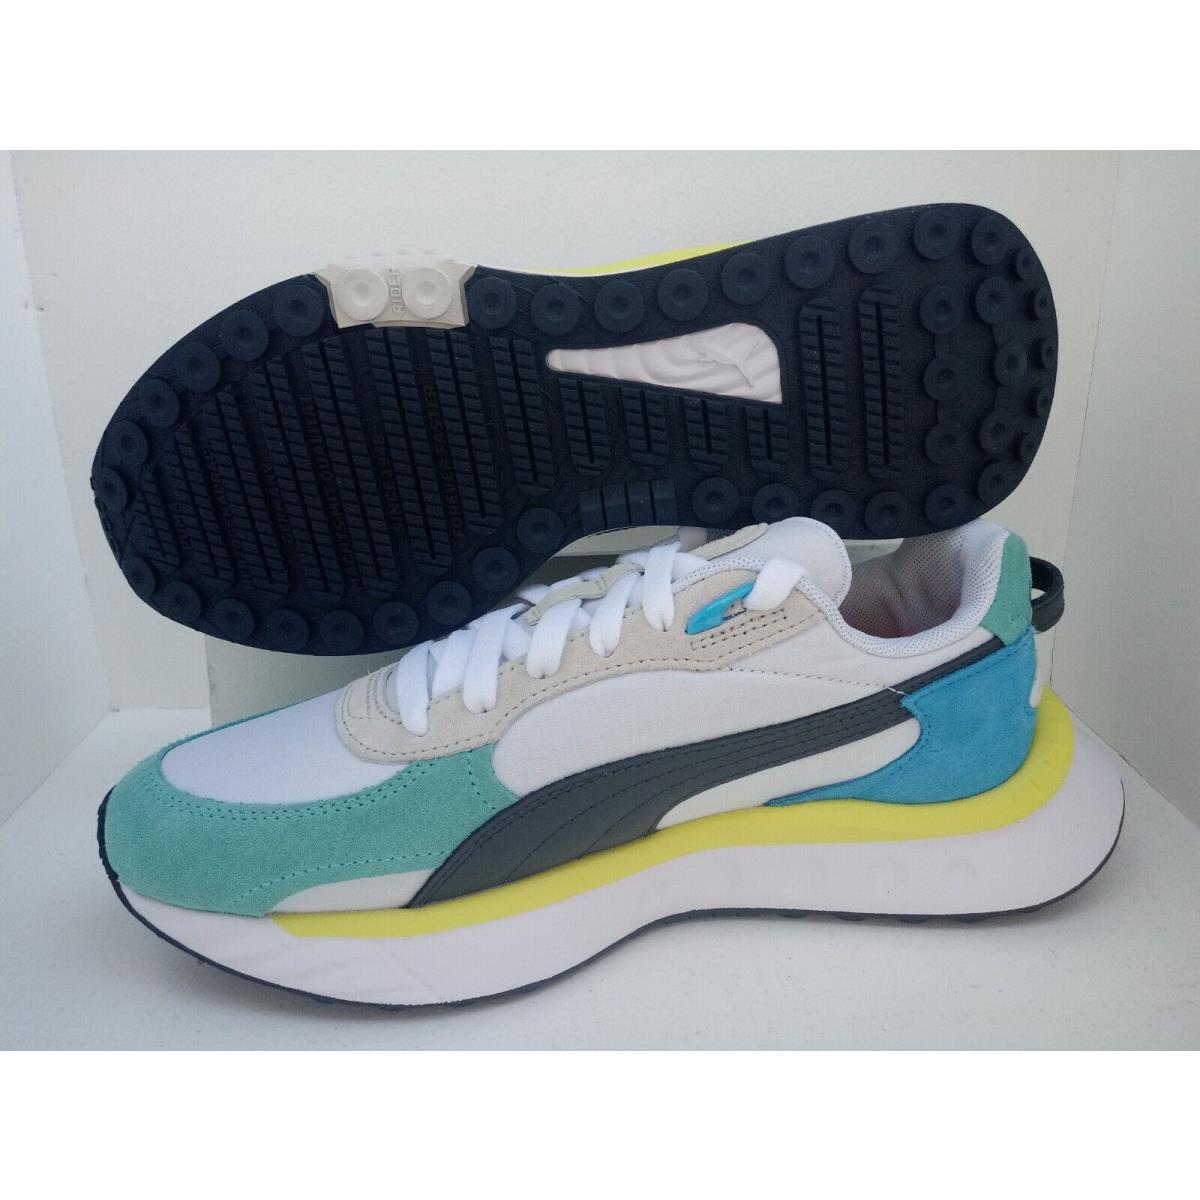 Puma shoes Shoes - Elektro Aqua/Puma White 4